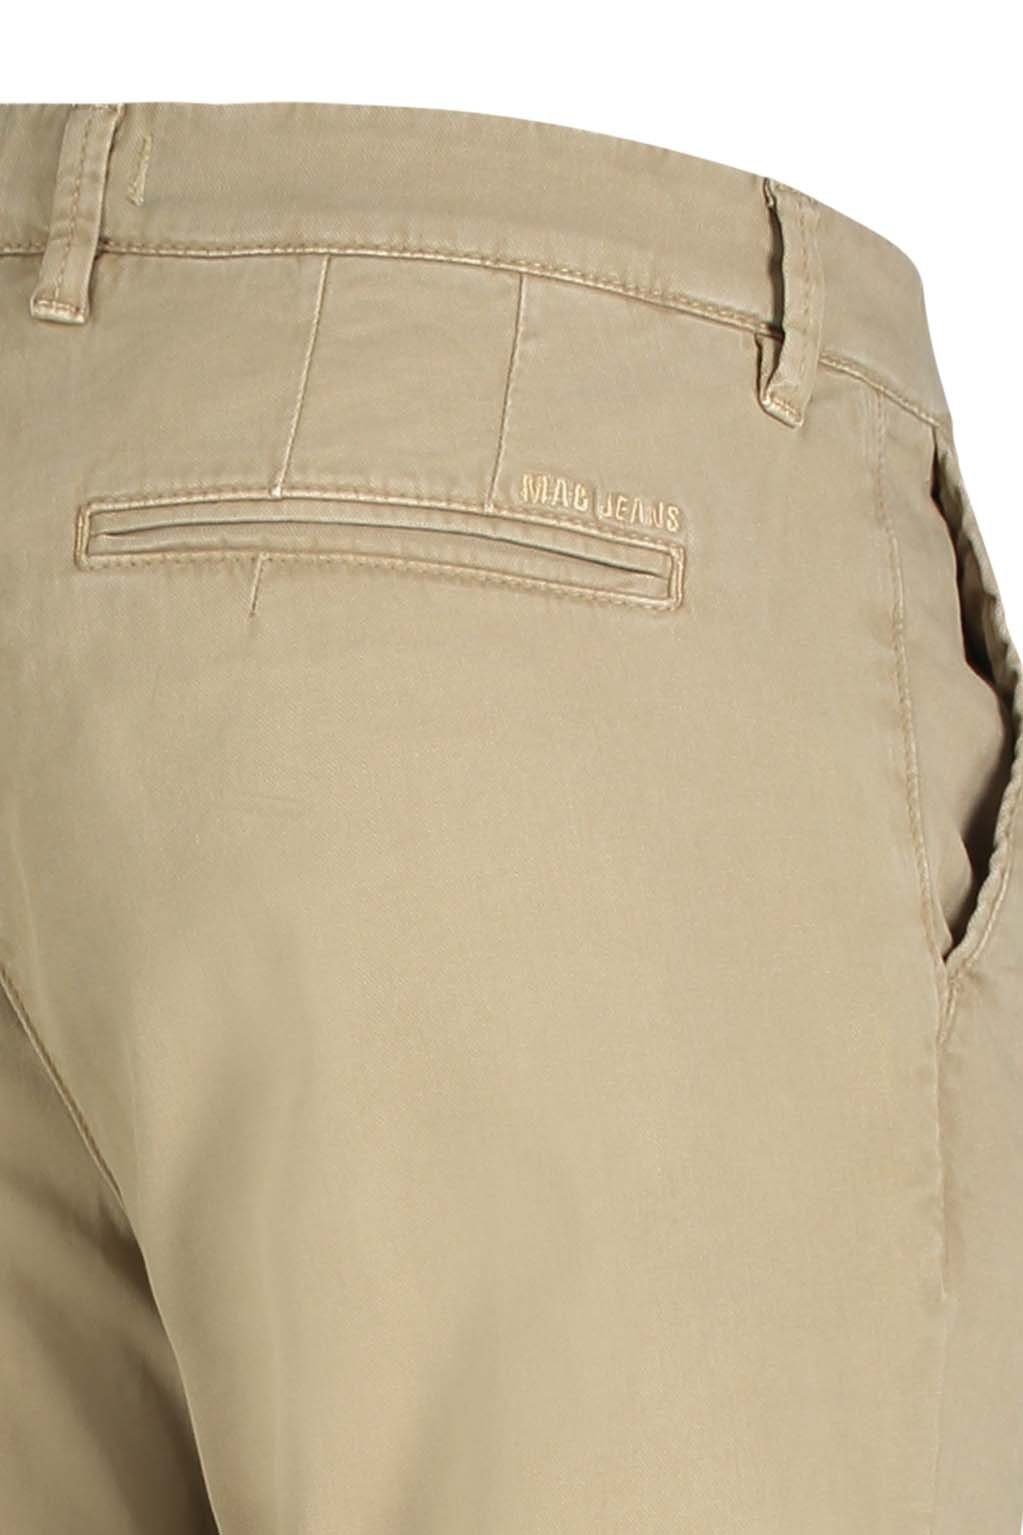 MAC 5-Pocket-Jeans MAC LENNOX 6332- CANVAS beige military STRETCH PPT